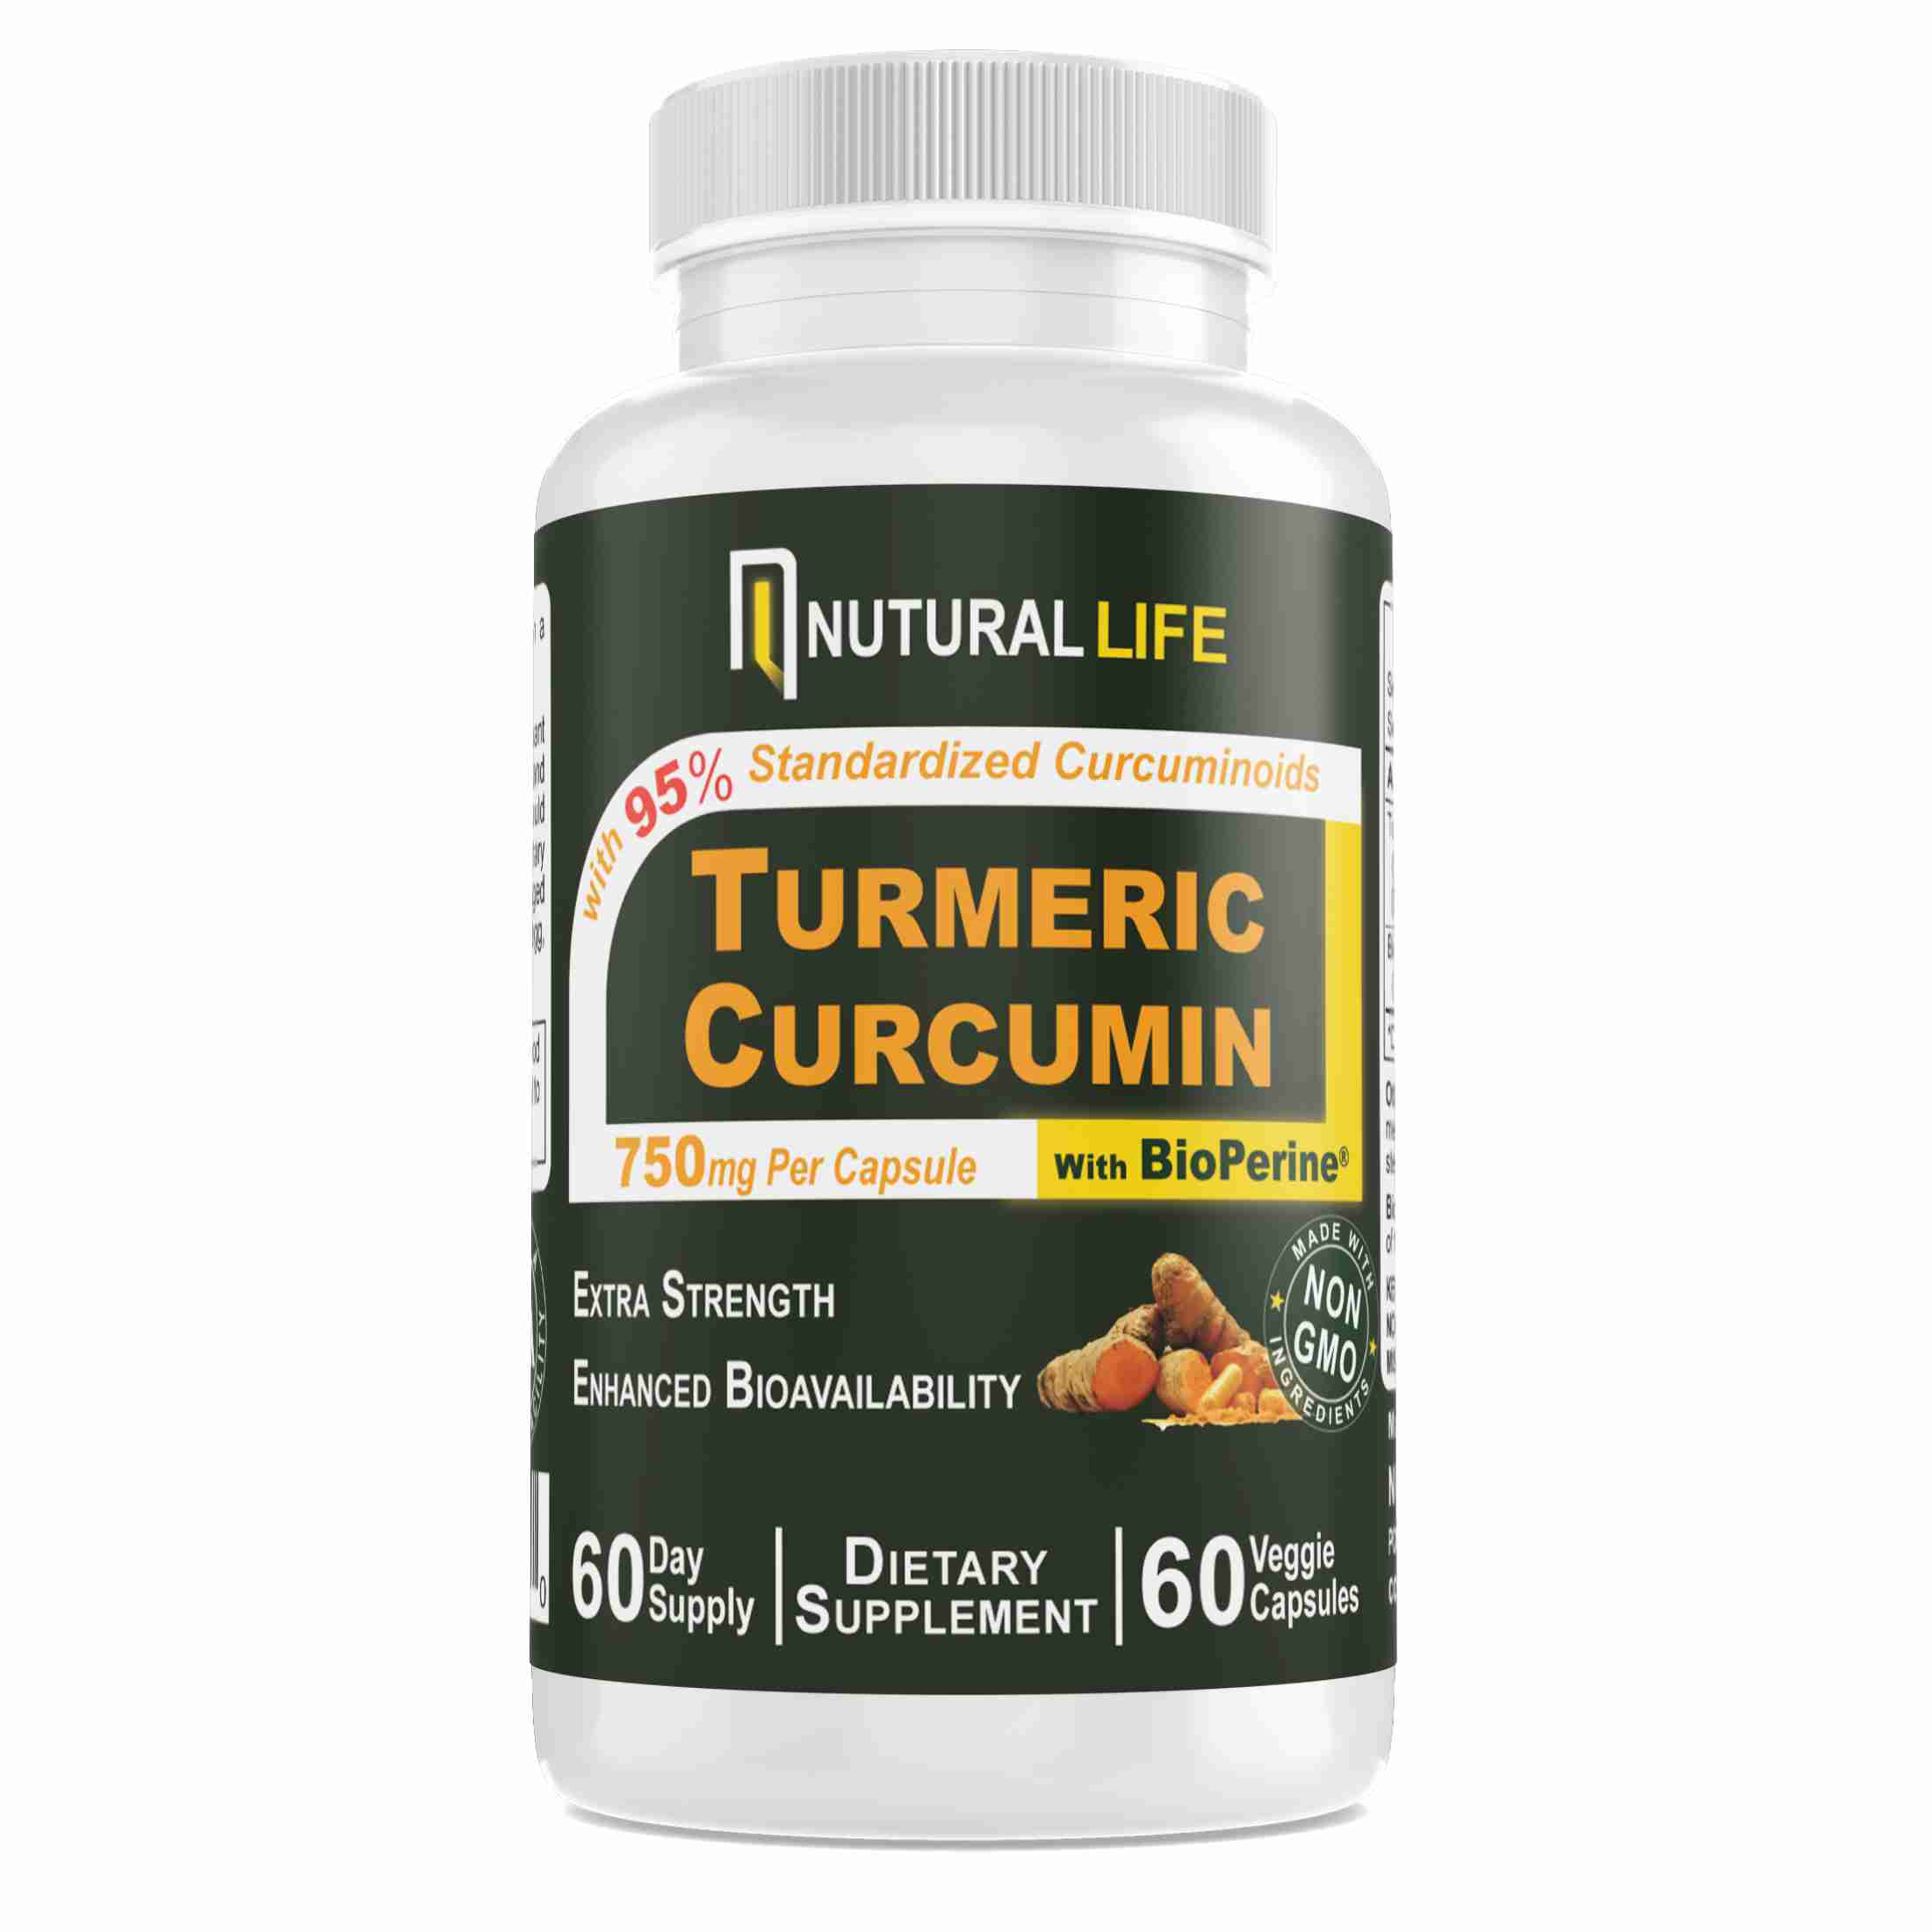 turmeric-curcumin-supplement with cash back rebate